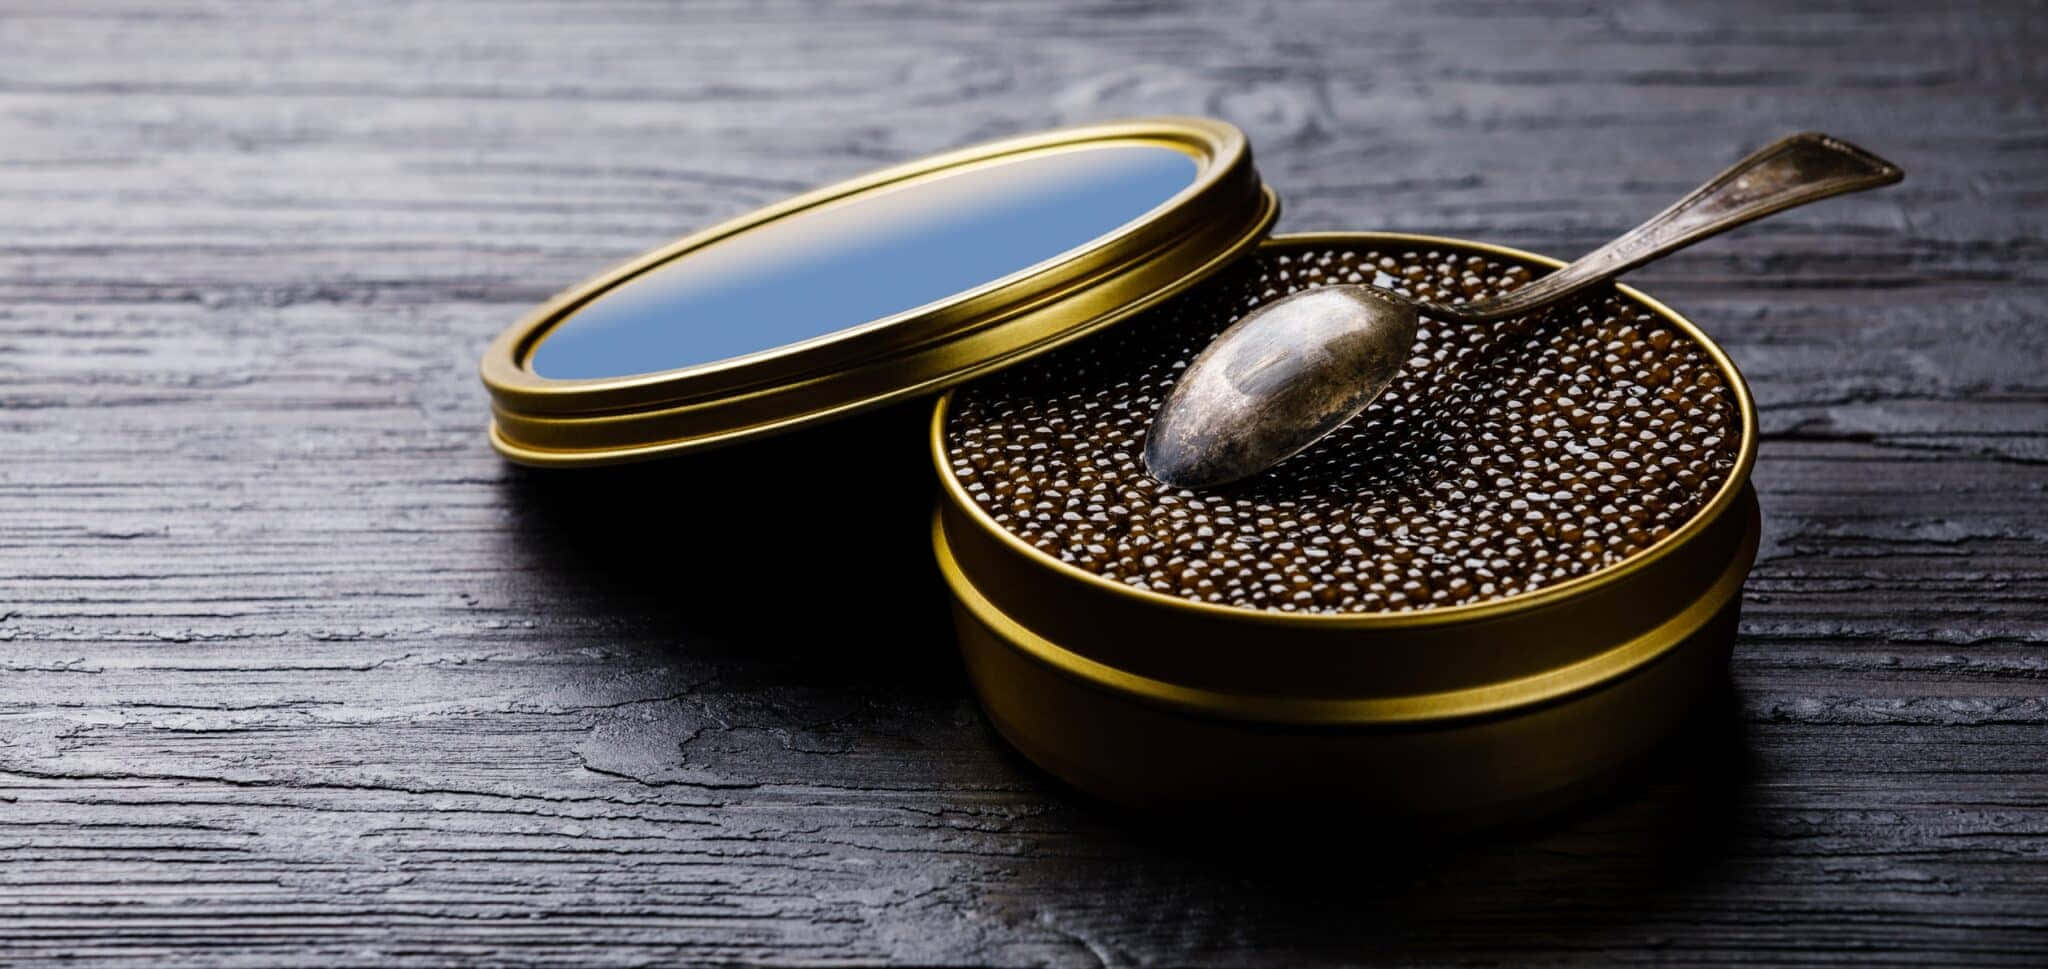 Black Caviar, the living legend Wallpaper